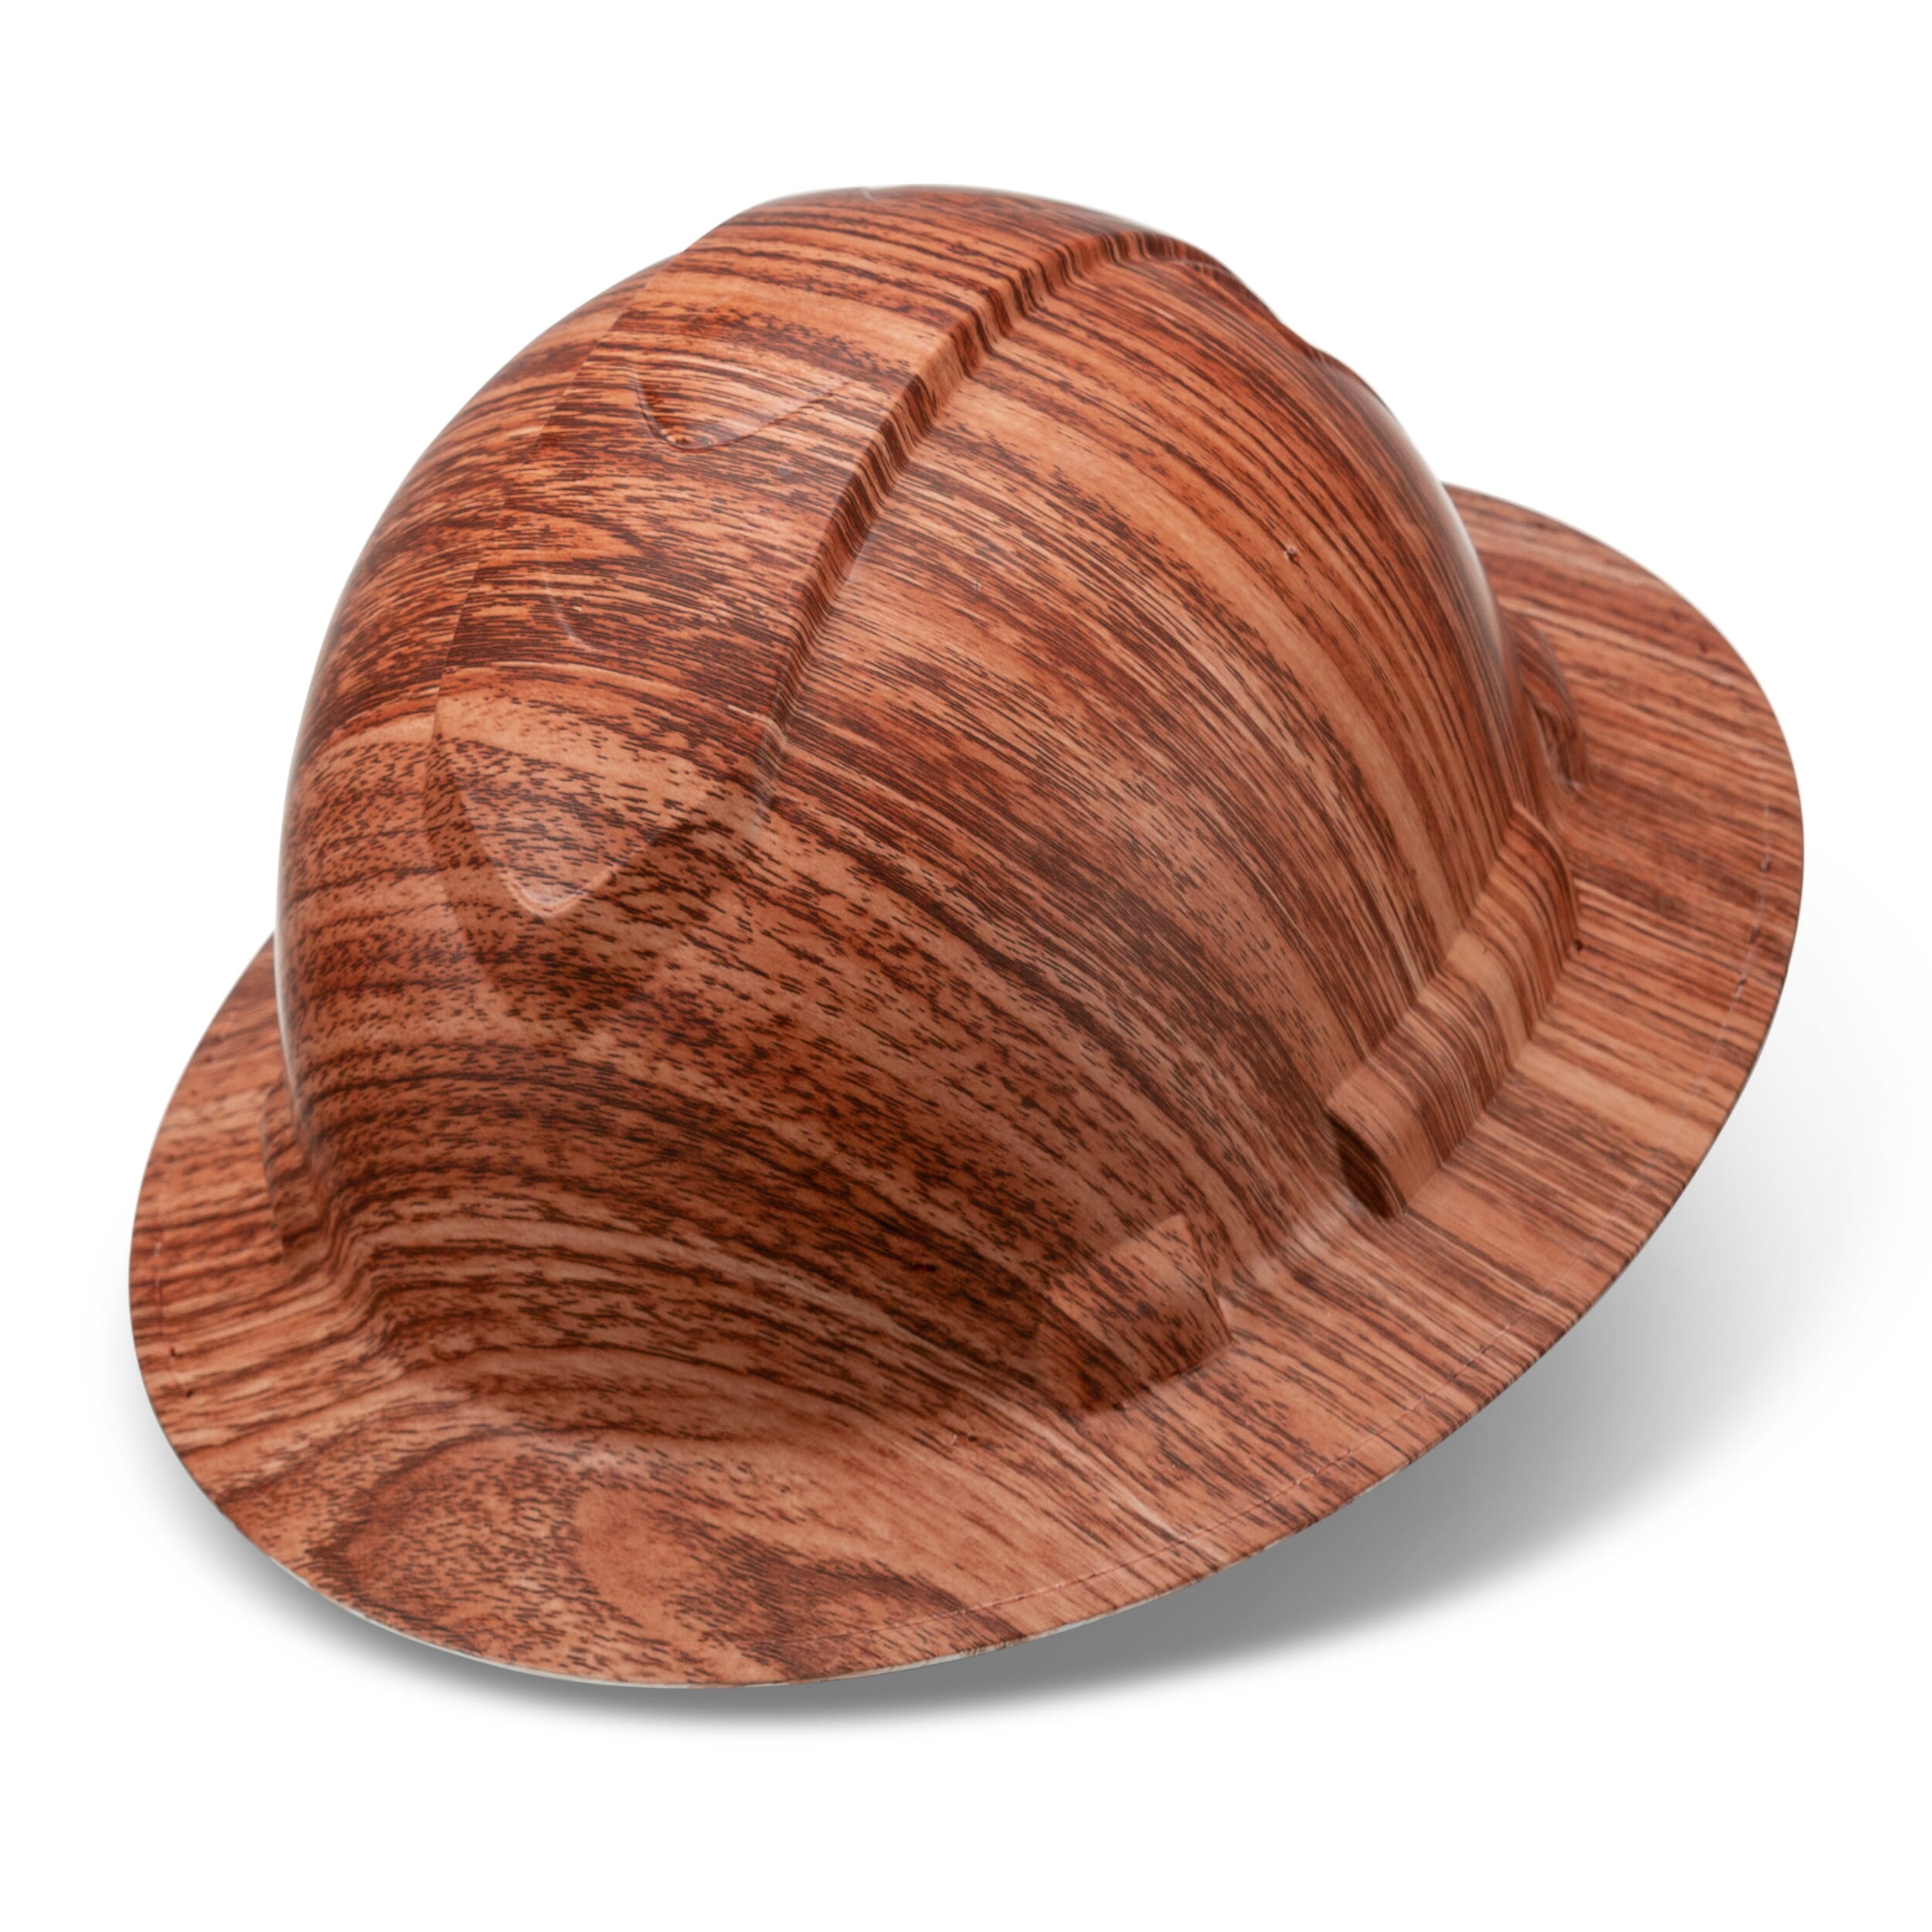 Full Brim Pyramex Hard Hat, Custom Knock On Wood Design, Safety Helmet, 6 Point